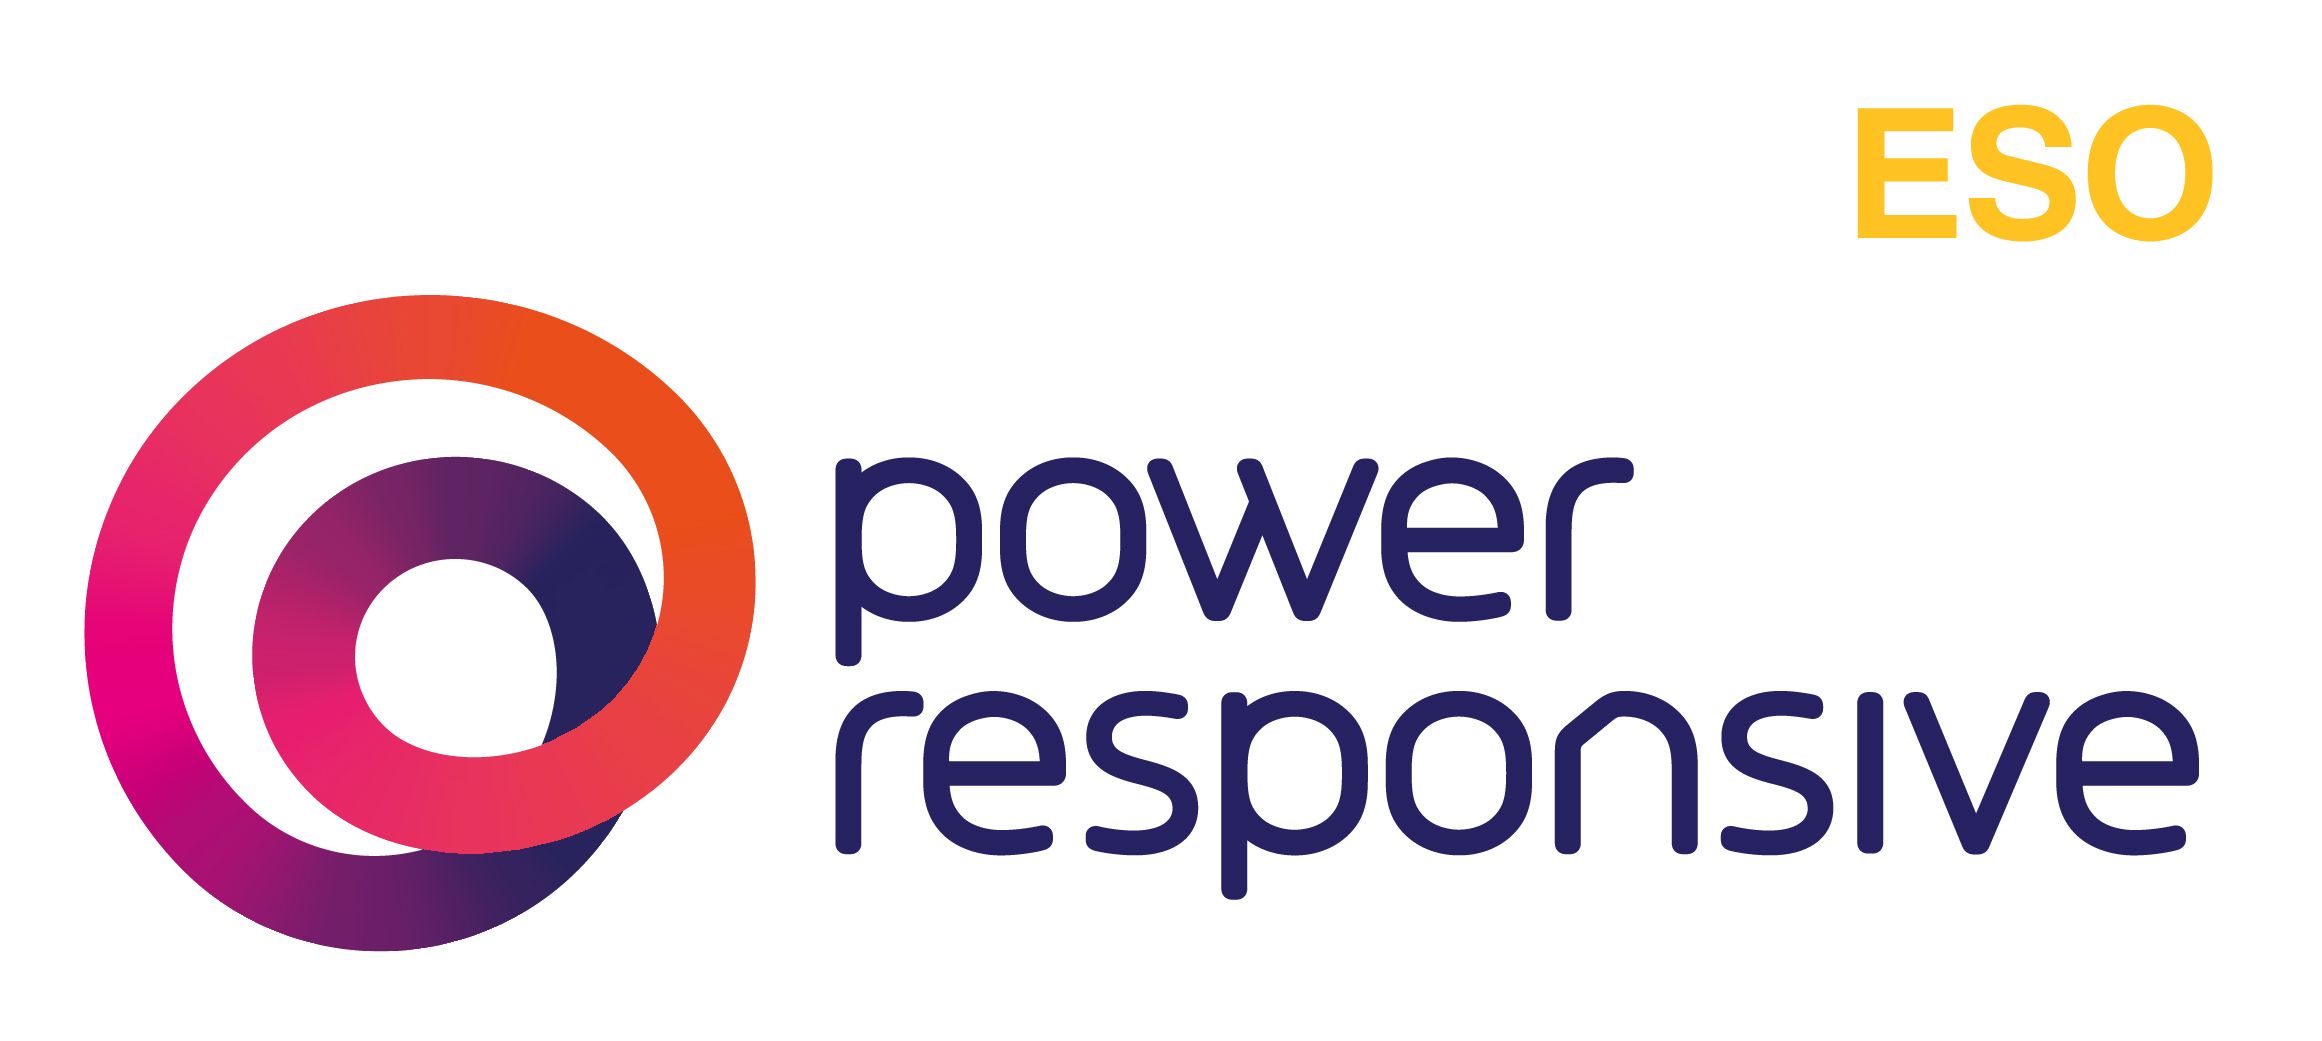 National Grid ESO power responsive logo